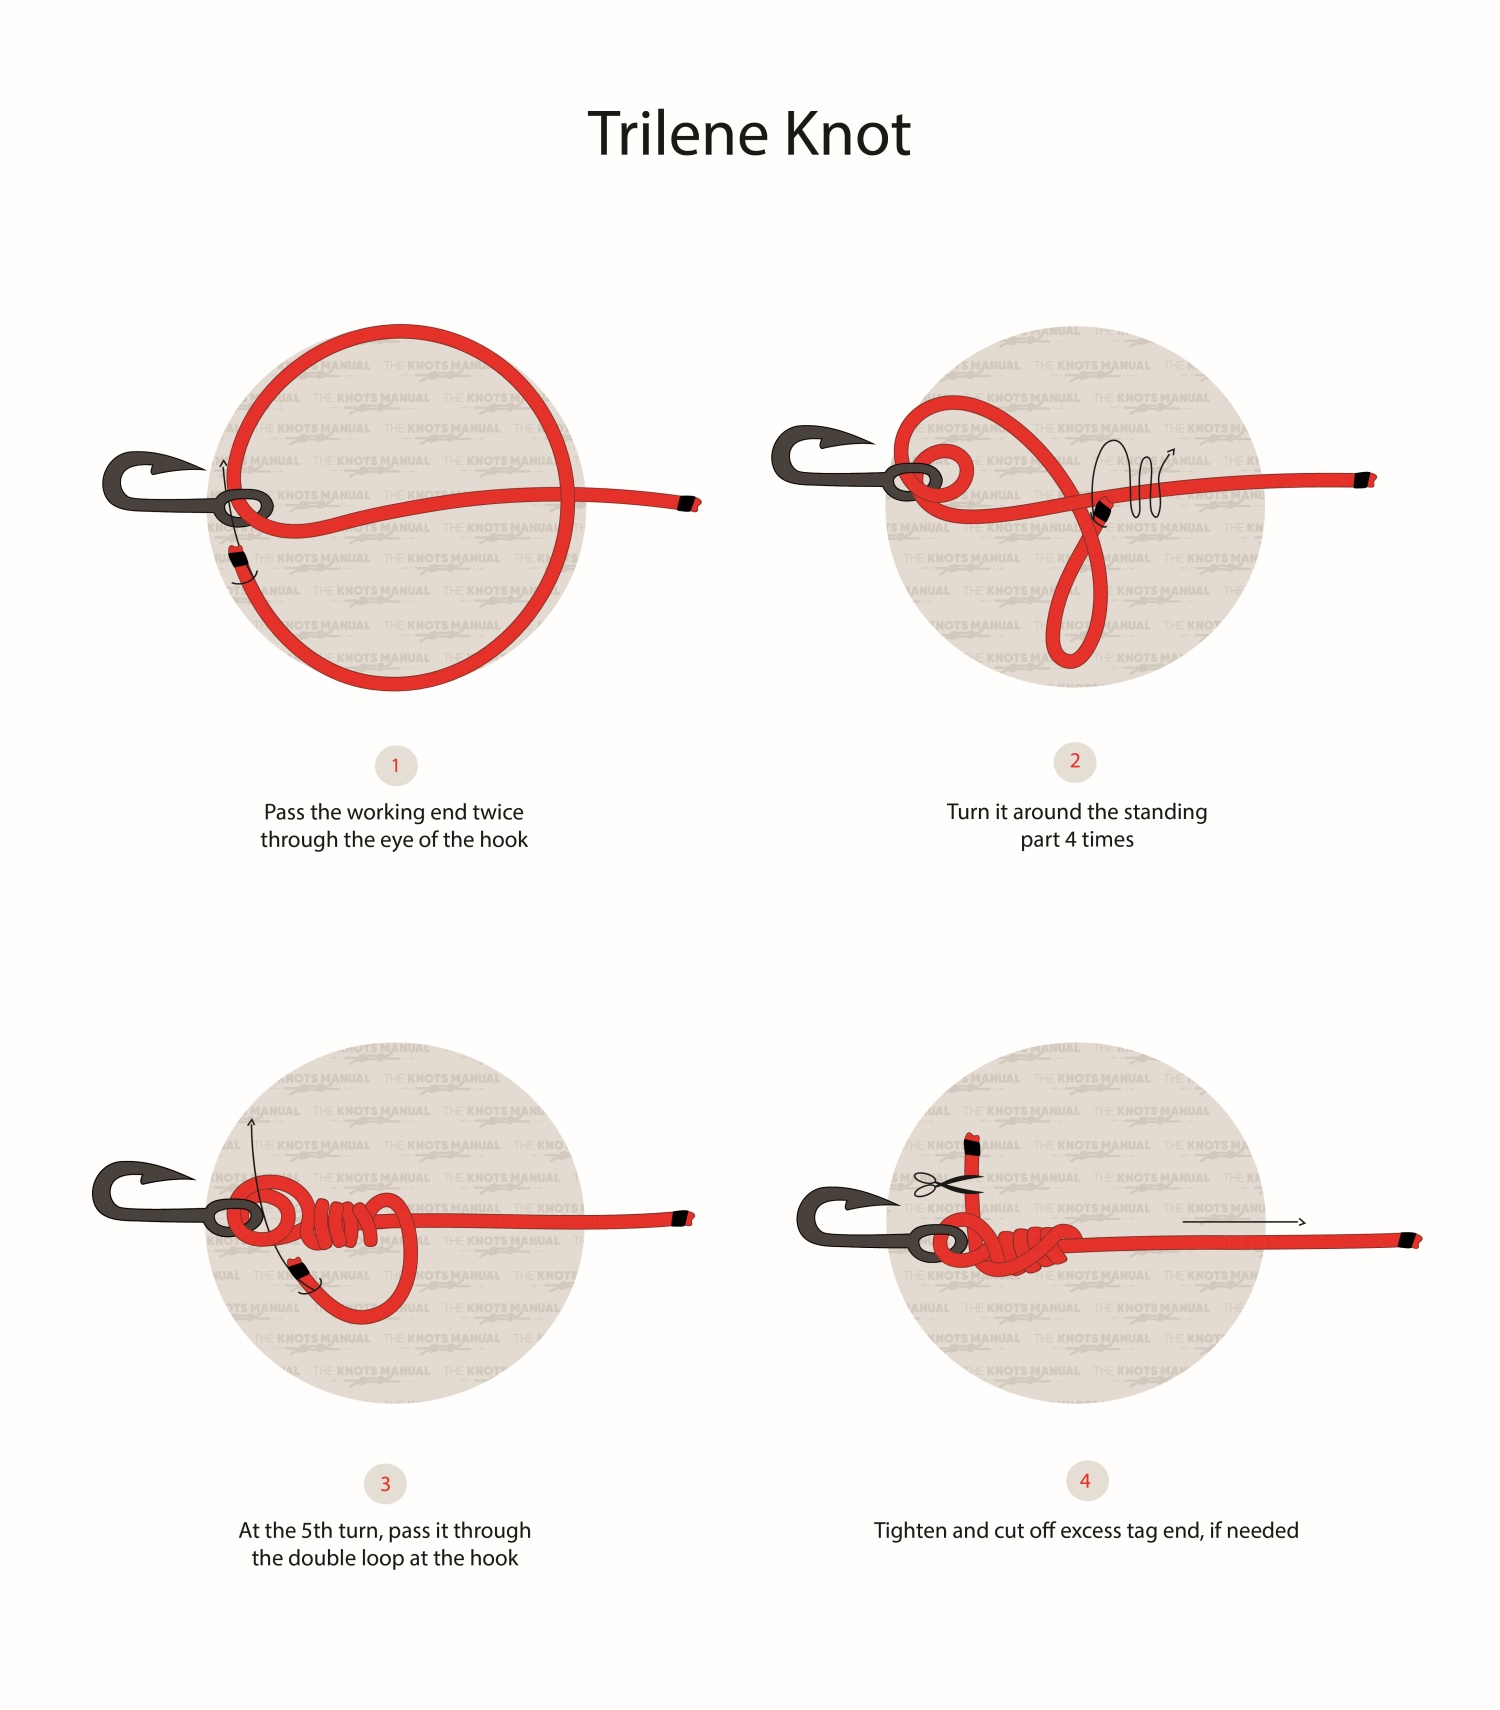 https://www.theknotsmanual.com/wp-content/uploads/fishing-knots/trilene-knot/TrileneKnot.jpg